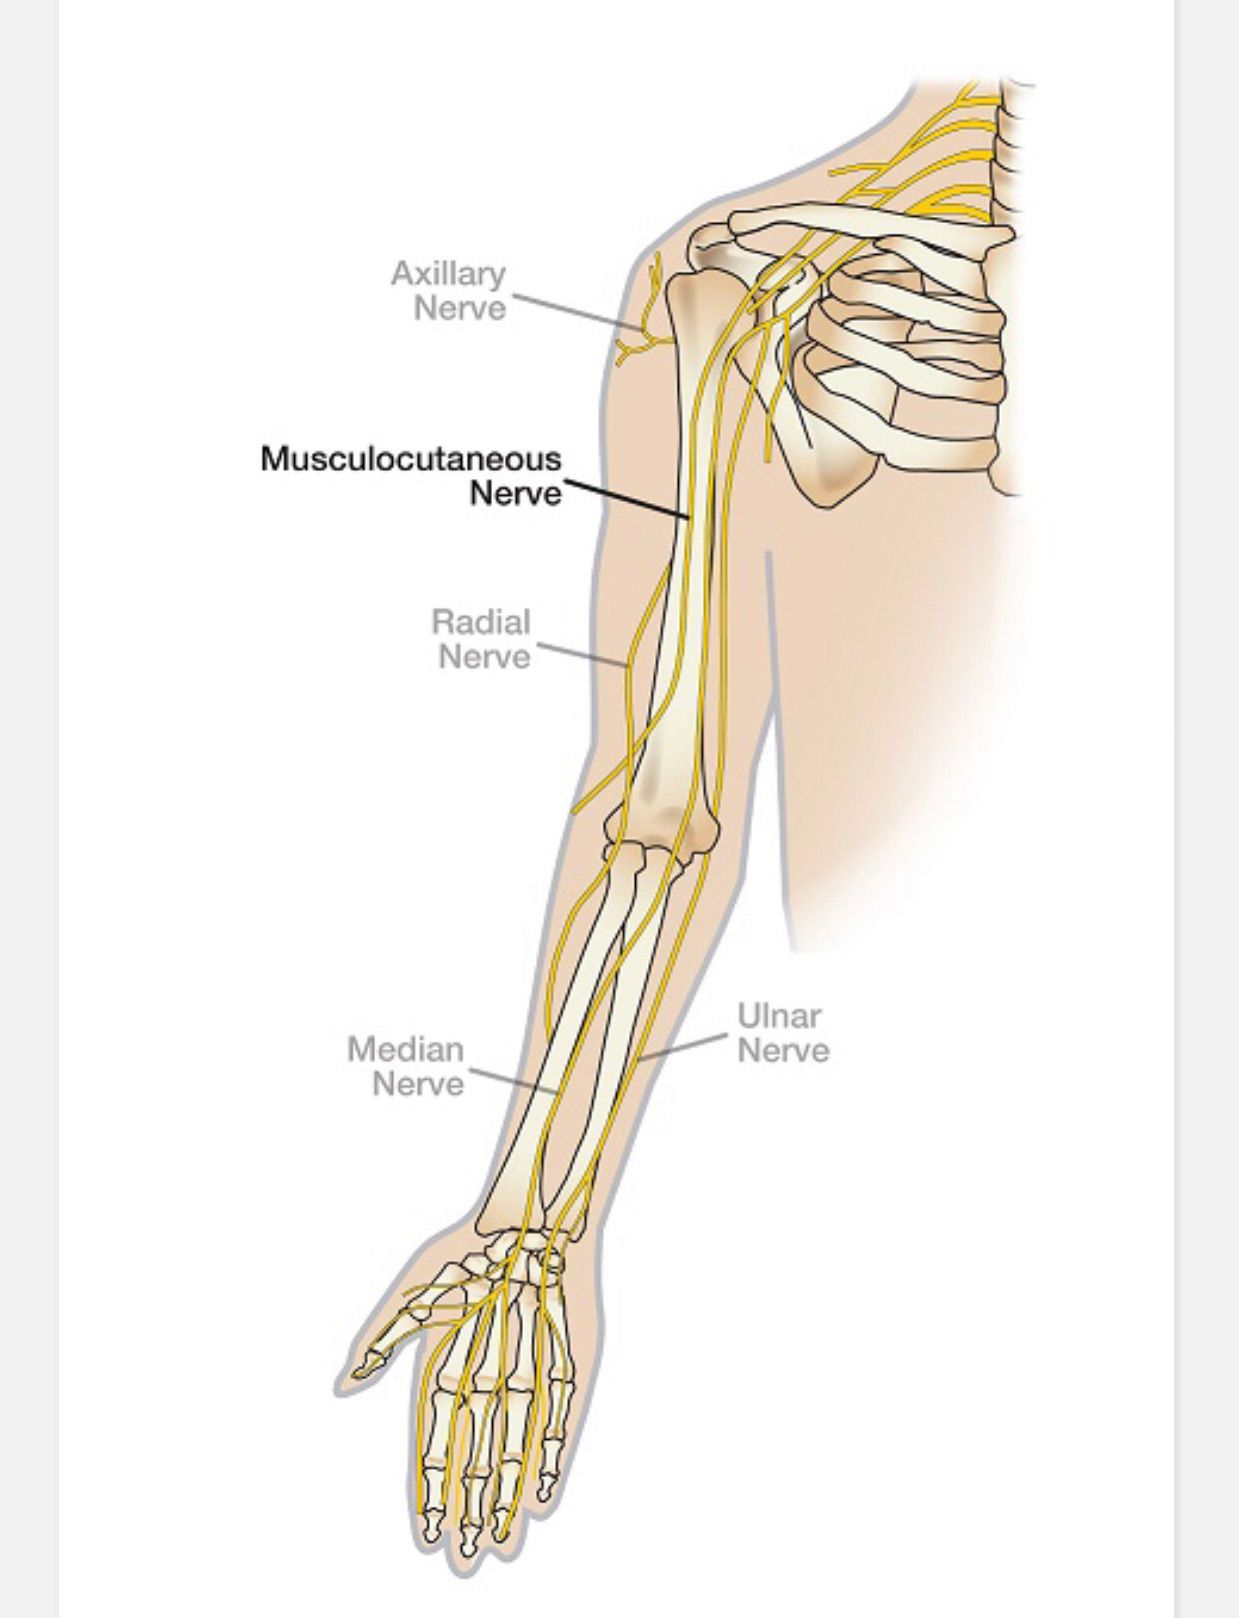 upper limb nerves